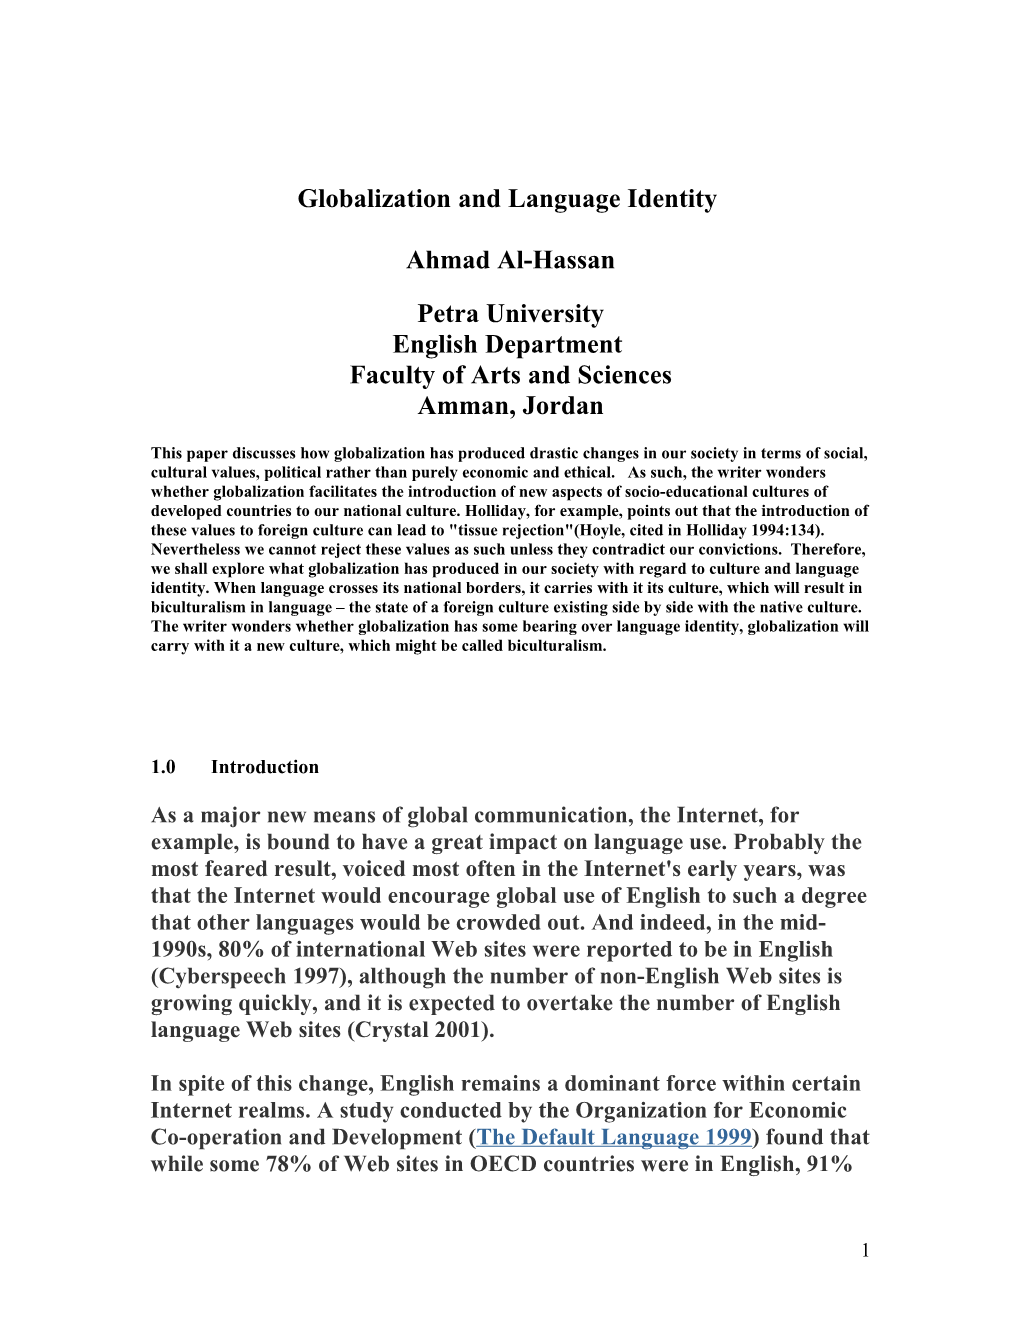 Globalization and Biculturalism in Language